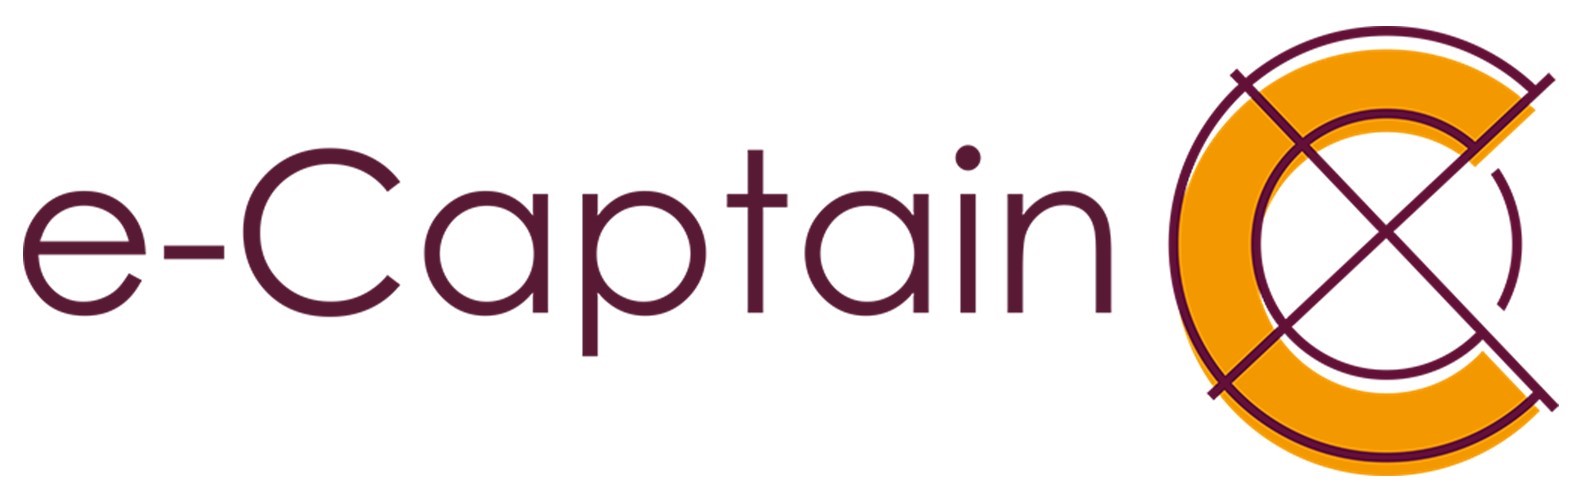 e-Captain logo 2.jpg